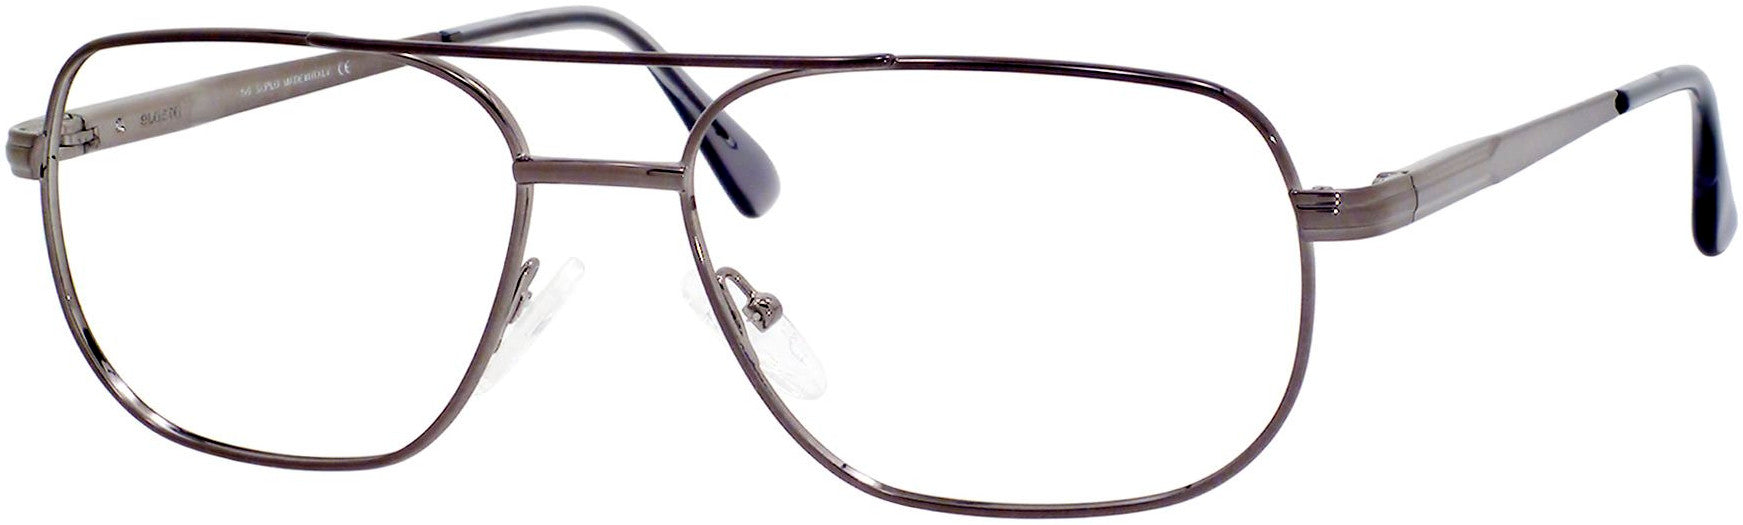  Elasta 7126 Rectangular Eyeglasses 02HH-02HH  Bakelite (00 Demo Lens)